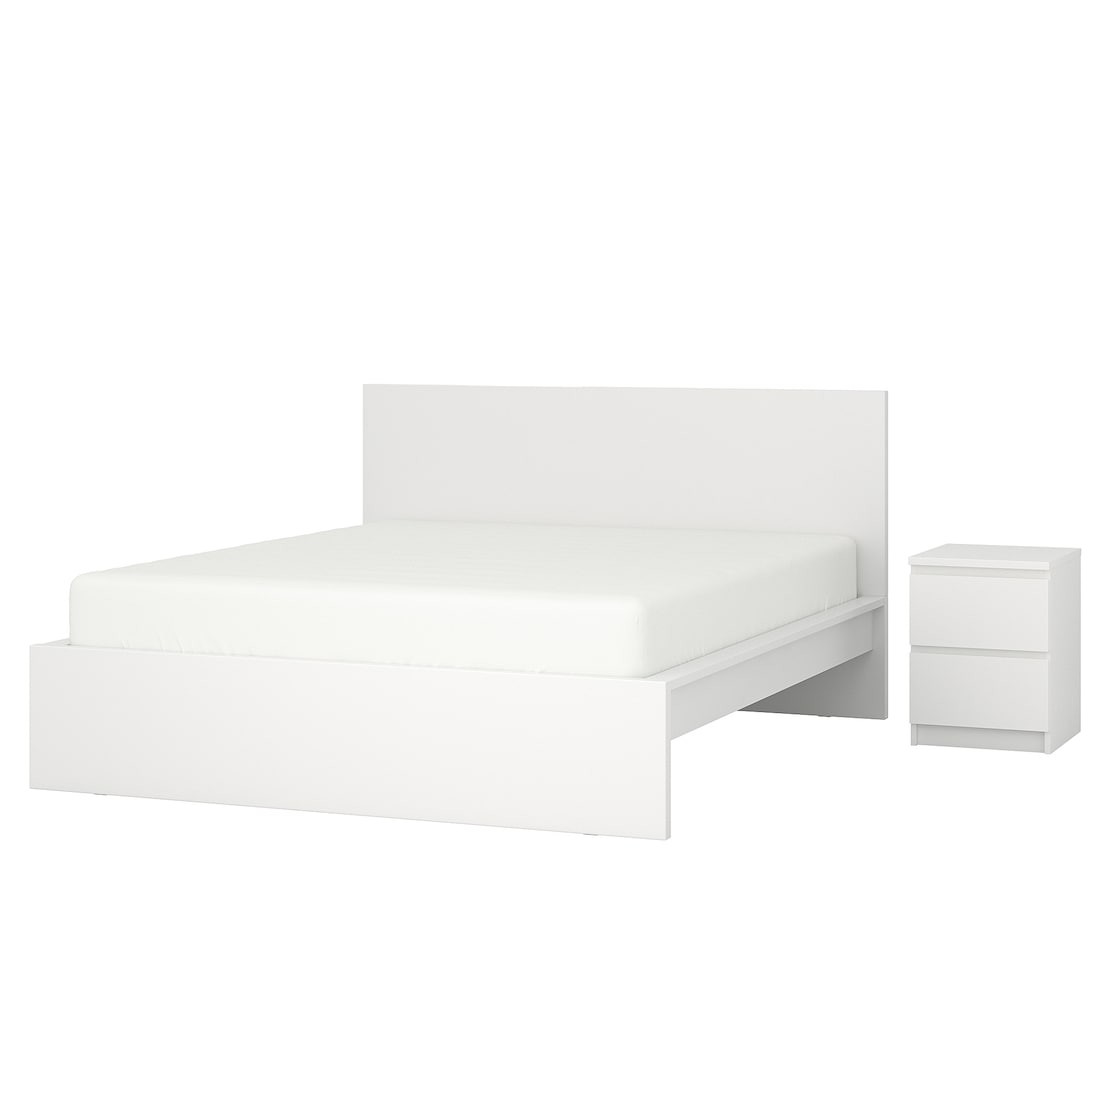 MALM МАЛЬМ Мебель для спальни, комплект 2 шт., белый, 180x200 см